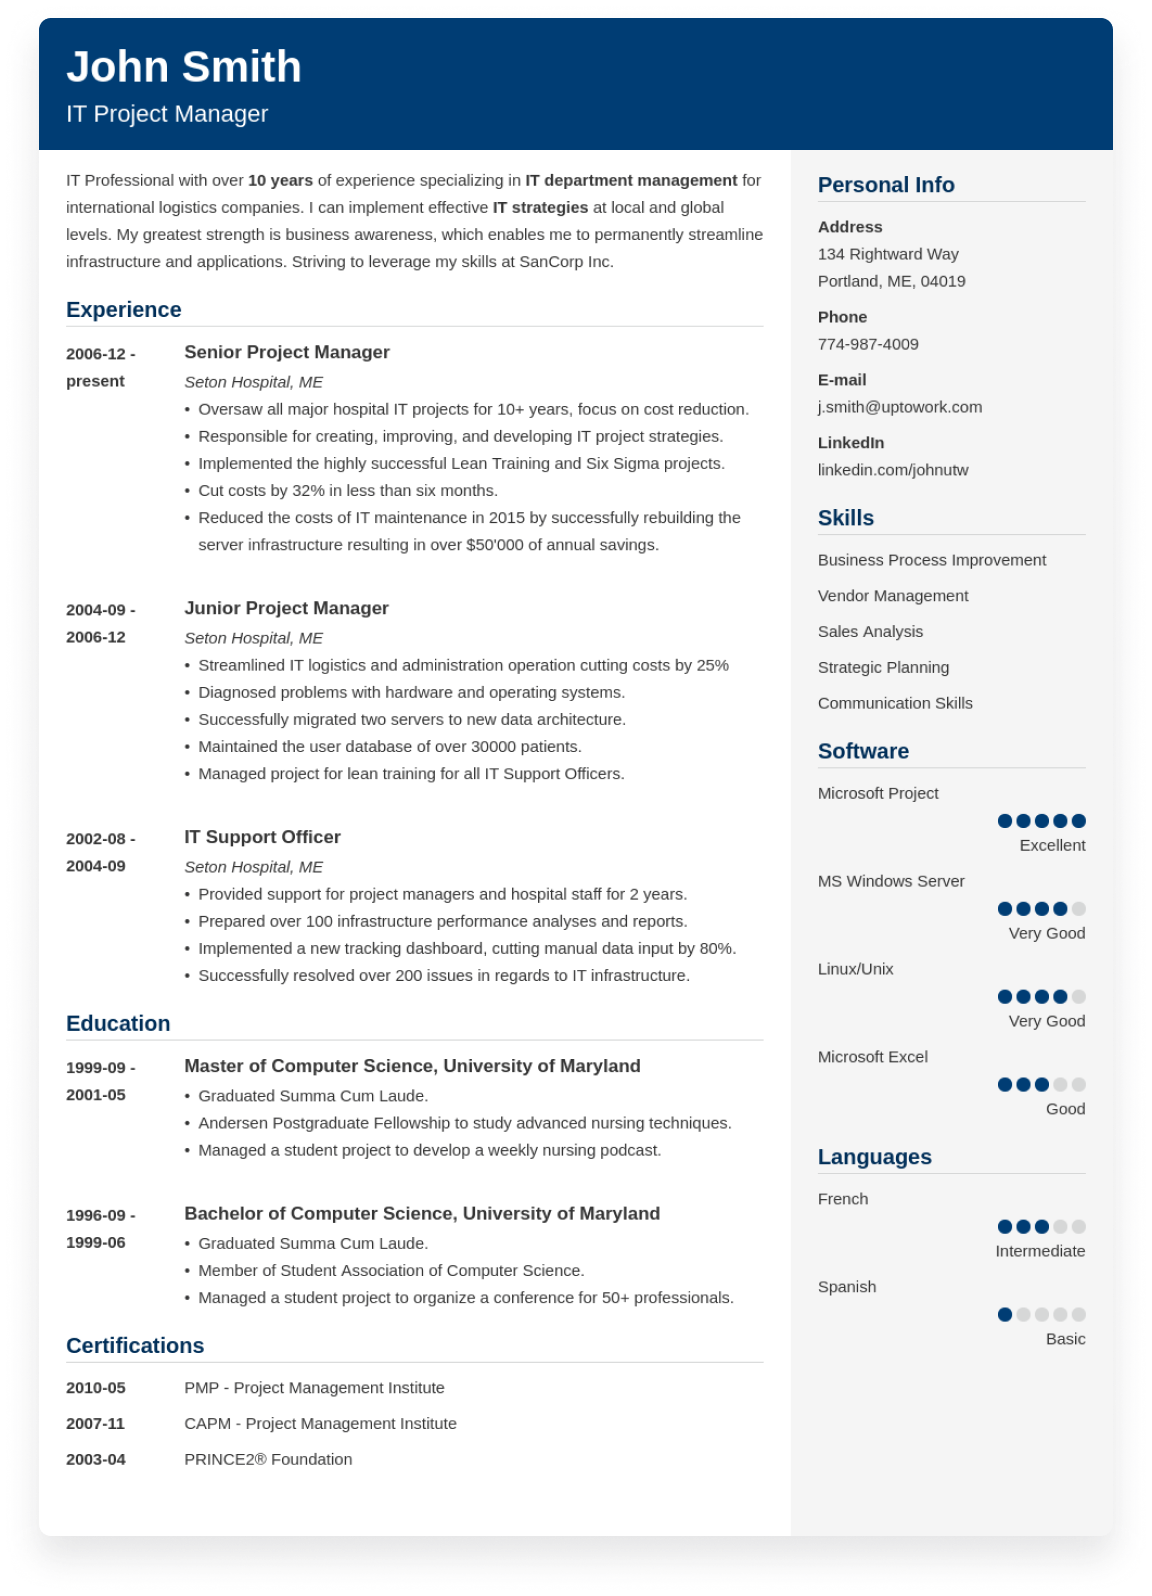 Sample CV Created With ResumeLab CV Builder